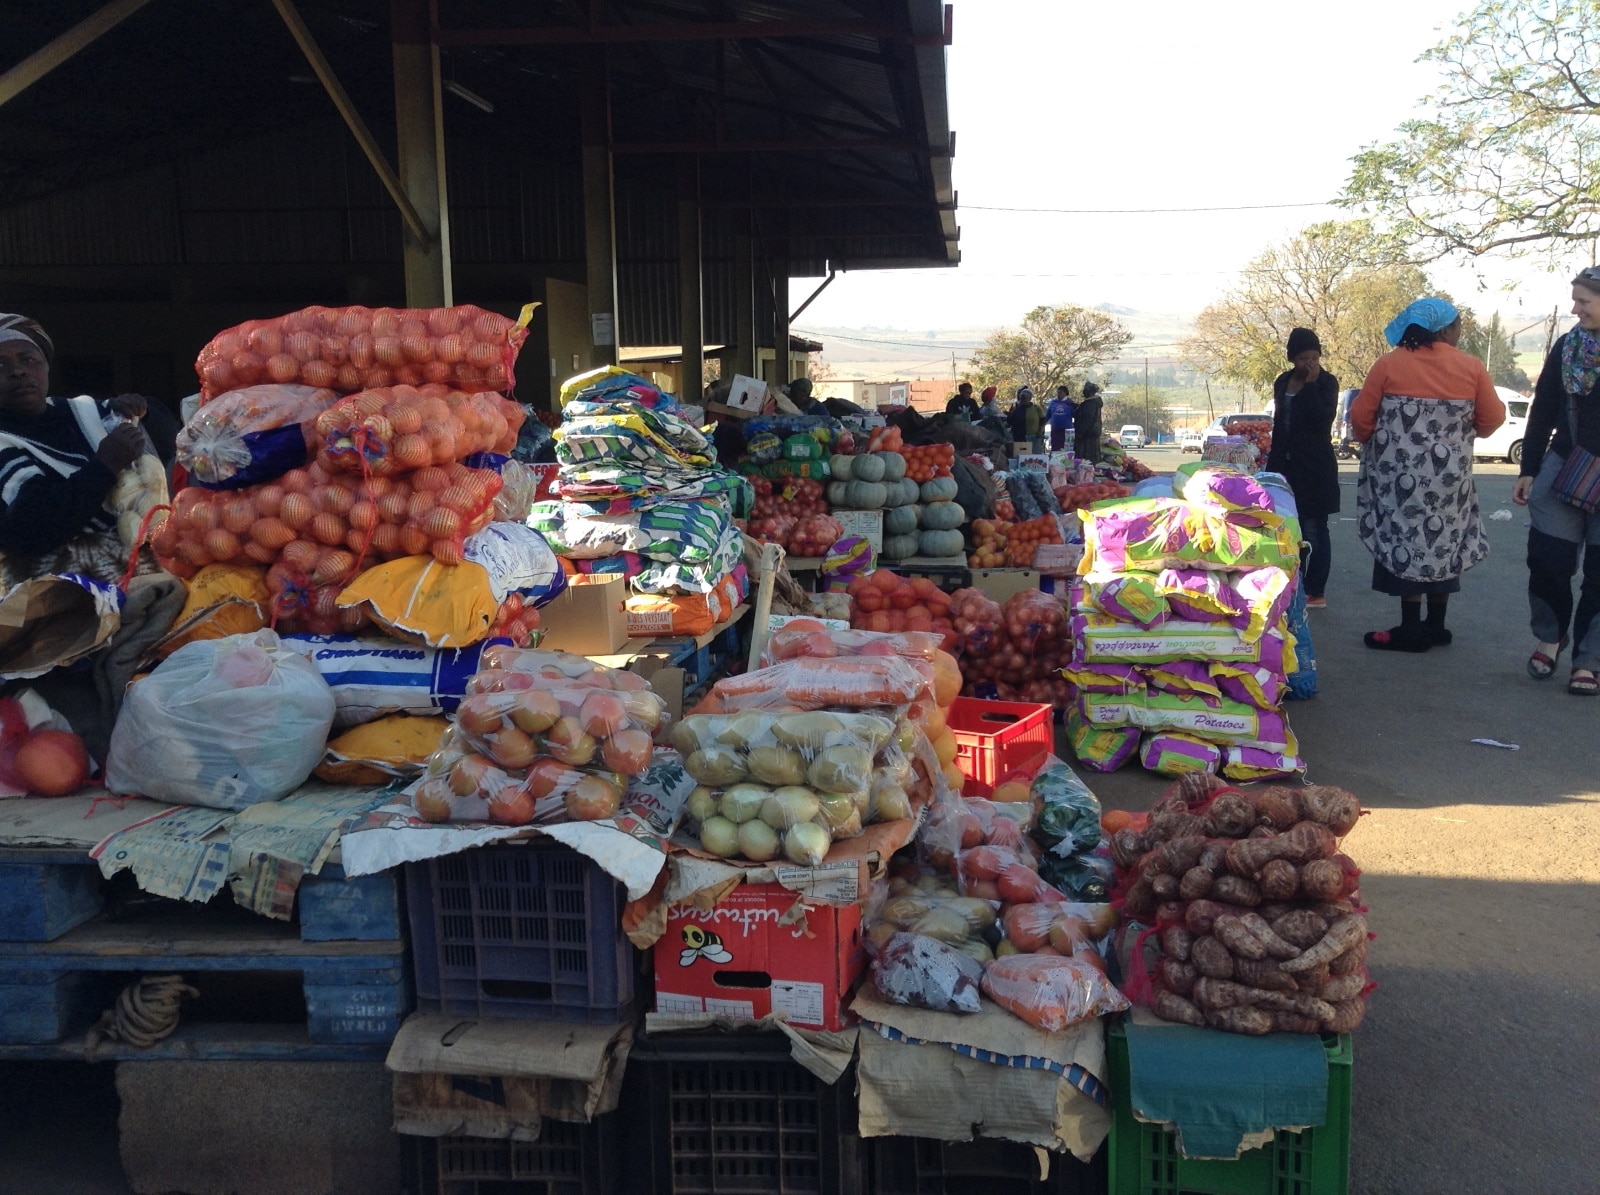 Food market stalls in Eswatini